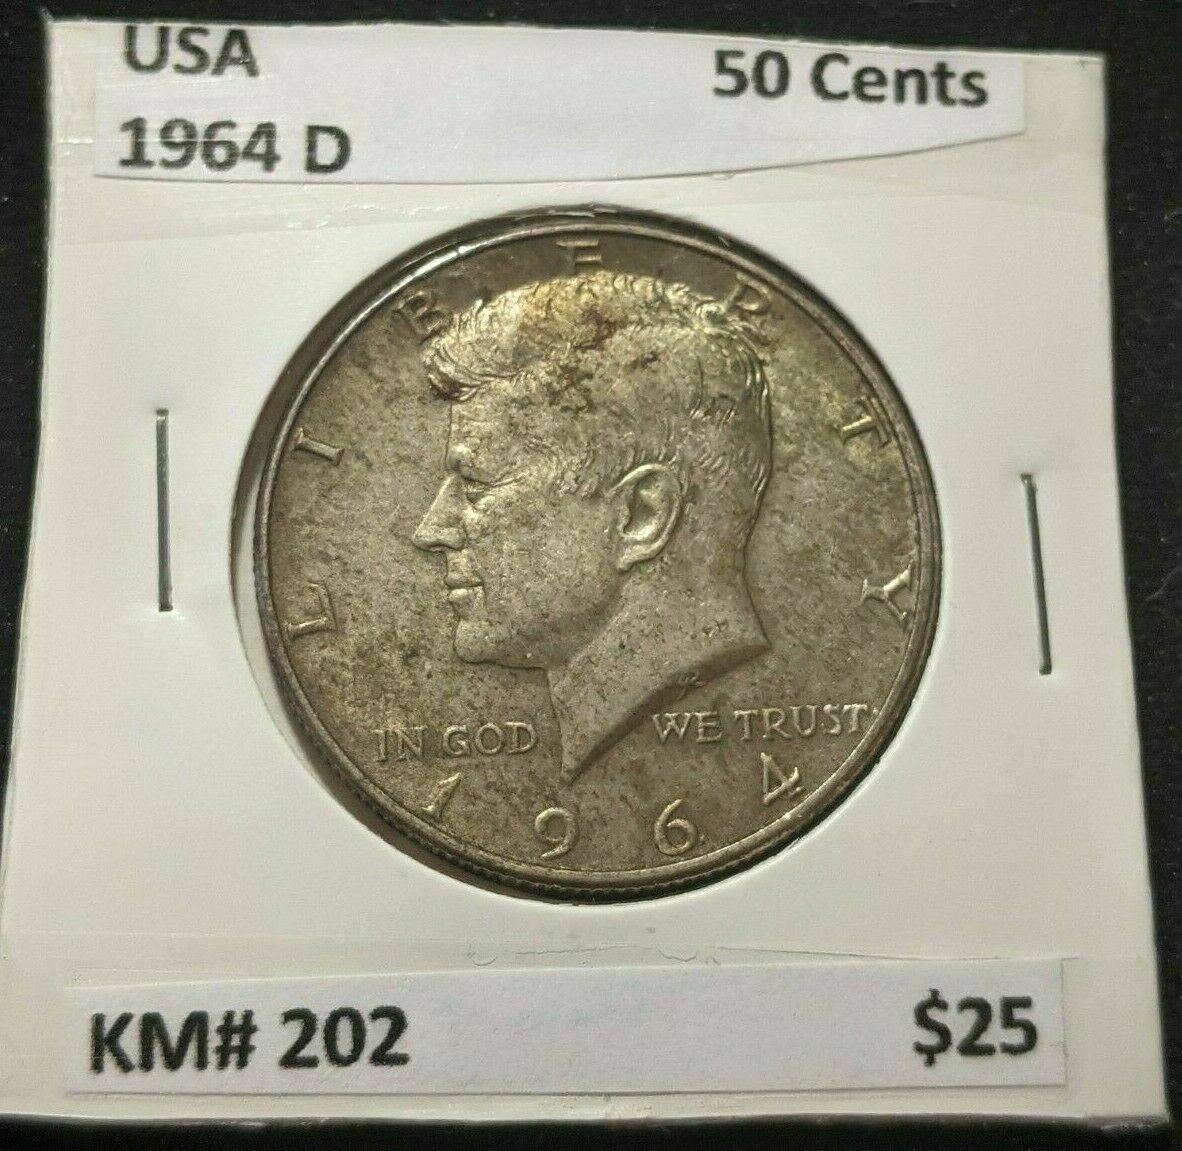 USA 1964 D 50 Cents KM# 202 #737  10A